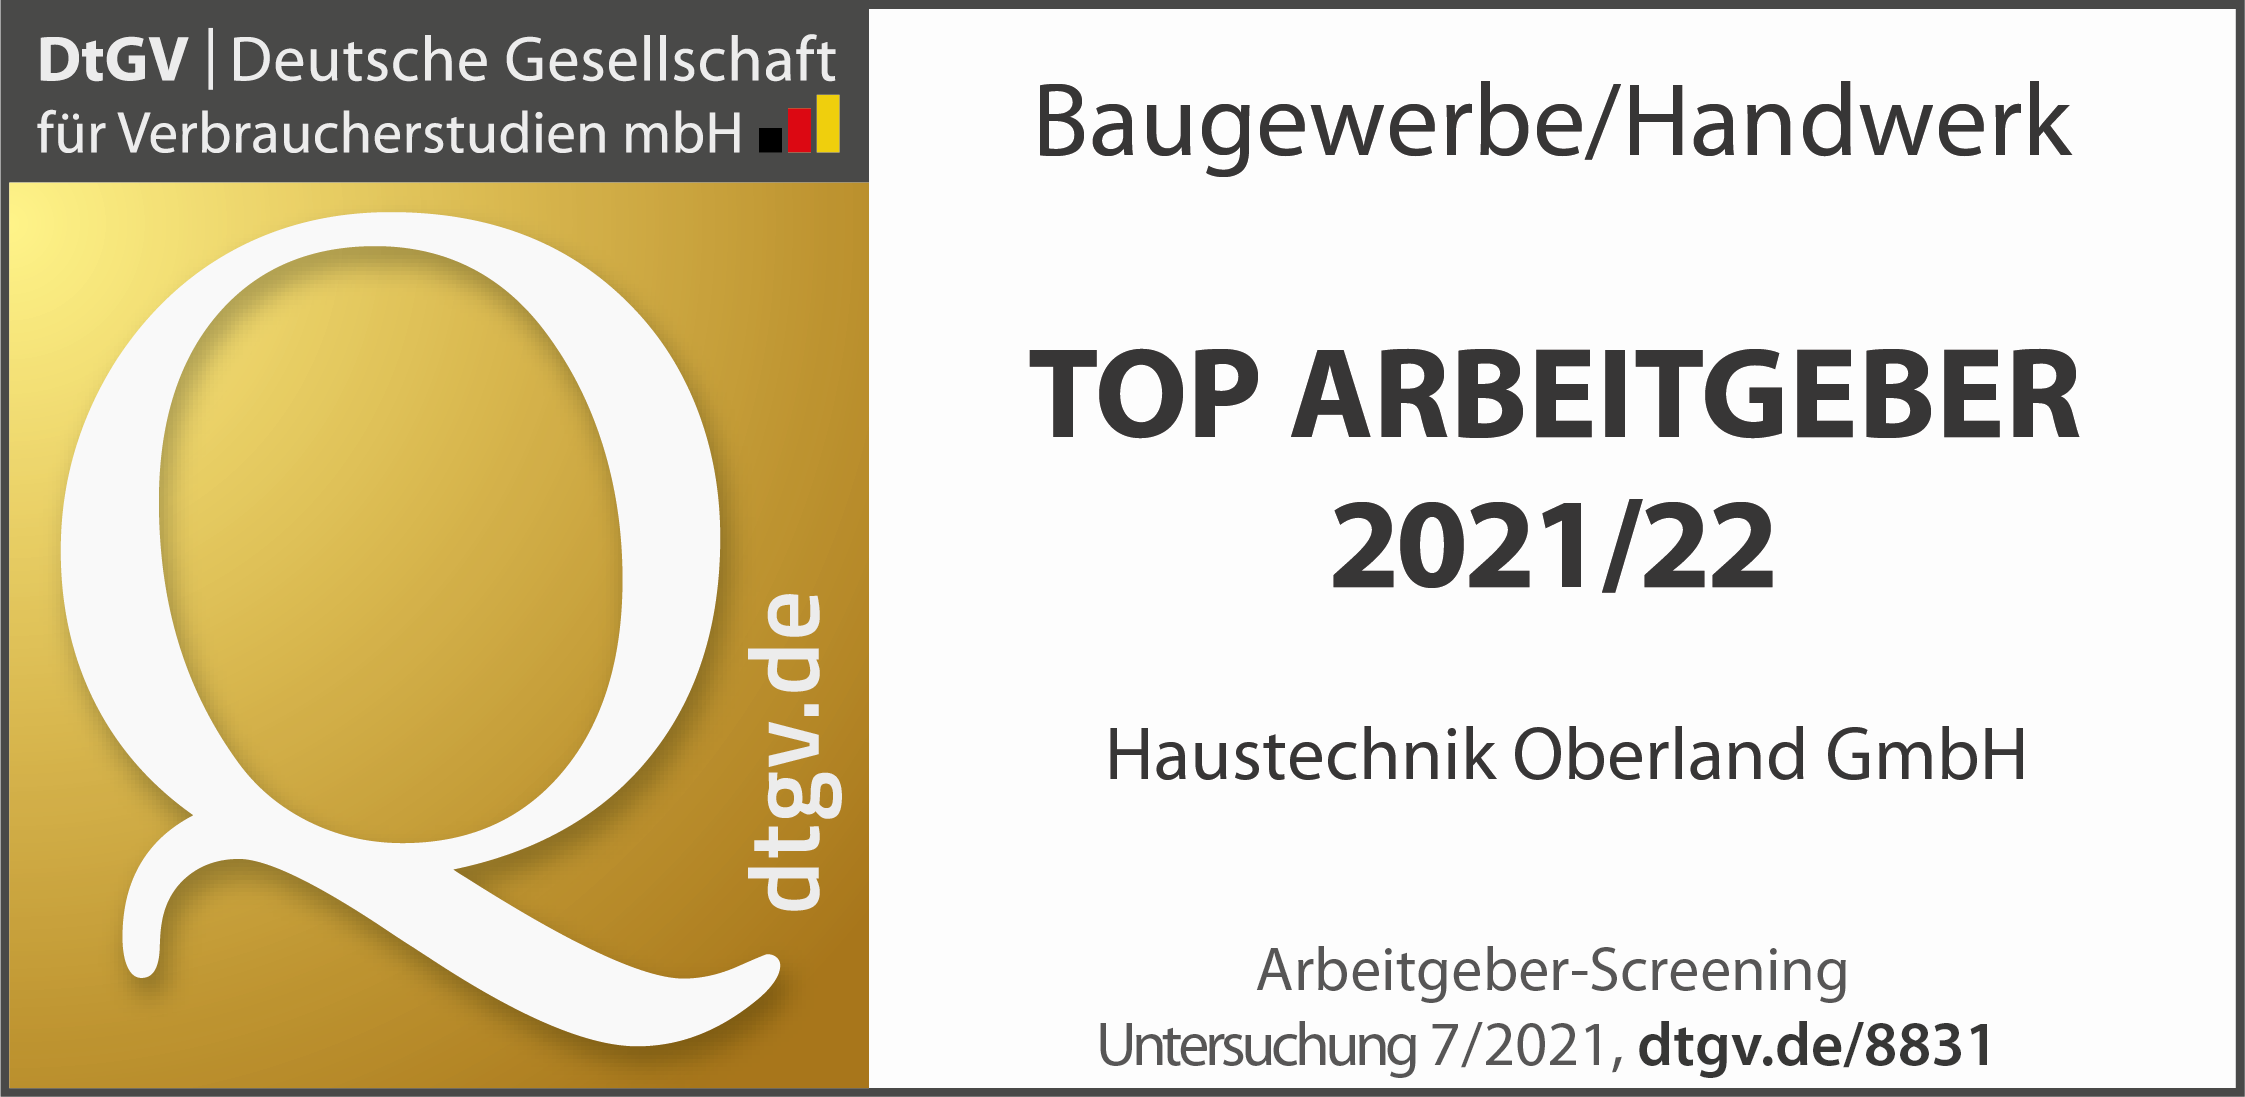 Top Arbeitgeber Baugewerbe Haustechnik Oberland GmbH